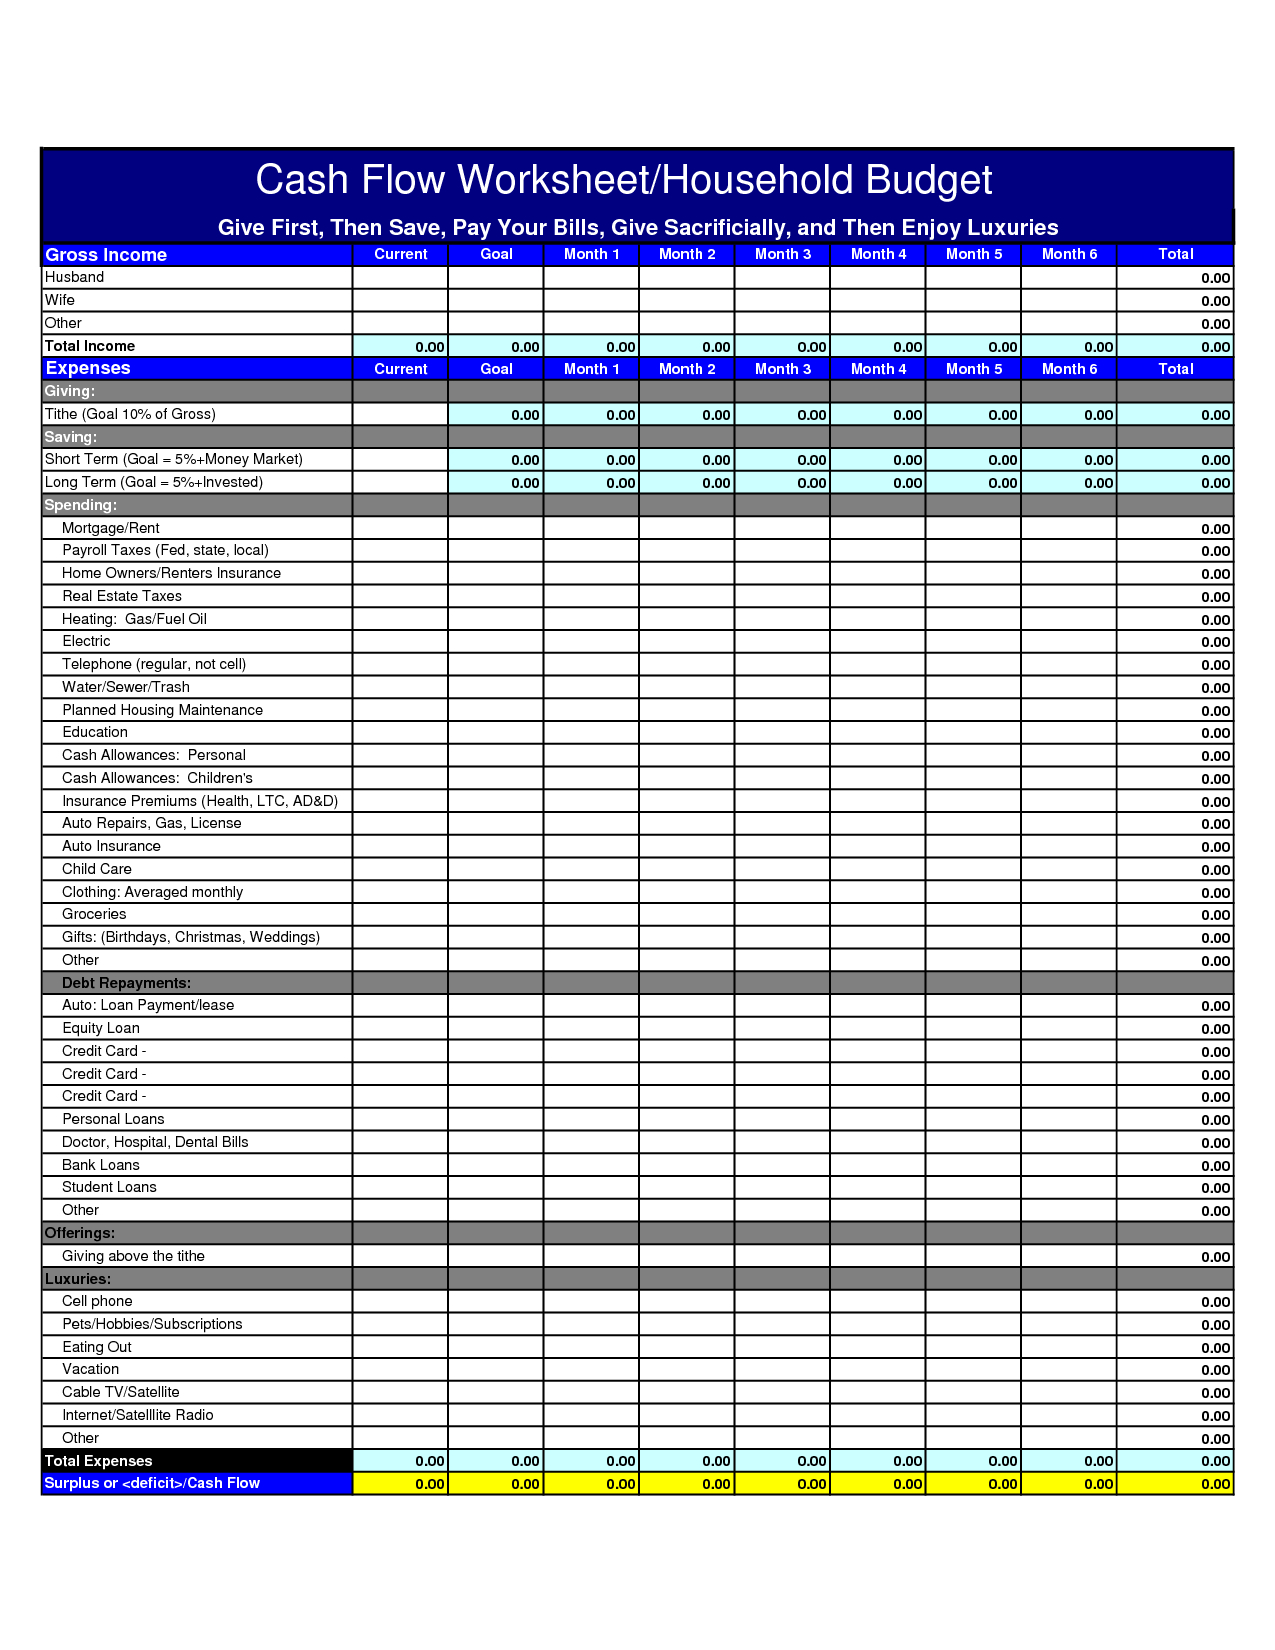 Cash Flow Budget Spreadsheet within Cash Flow Budget Worksheet Excel 5